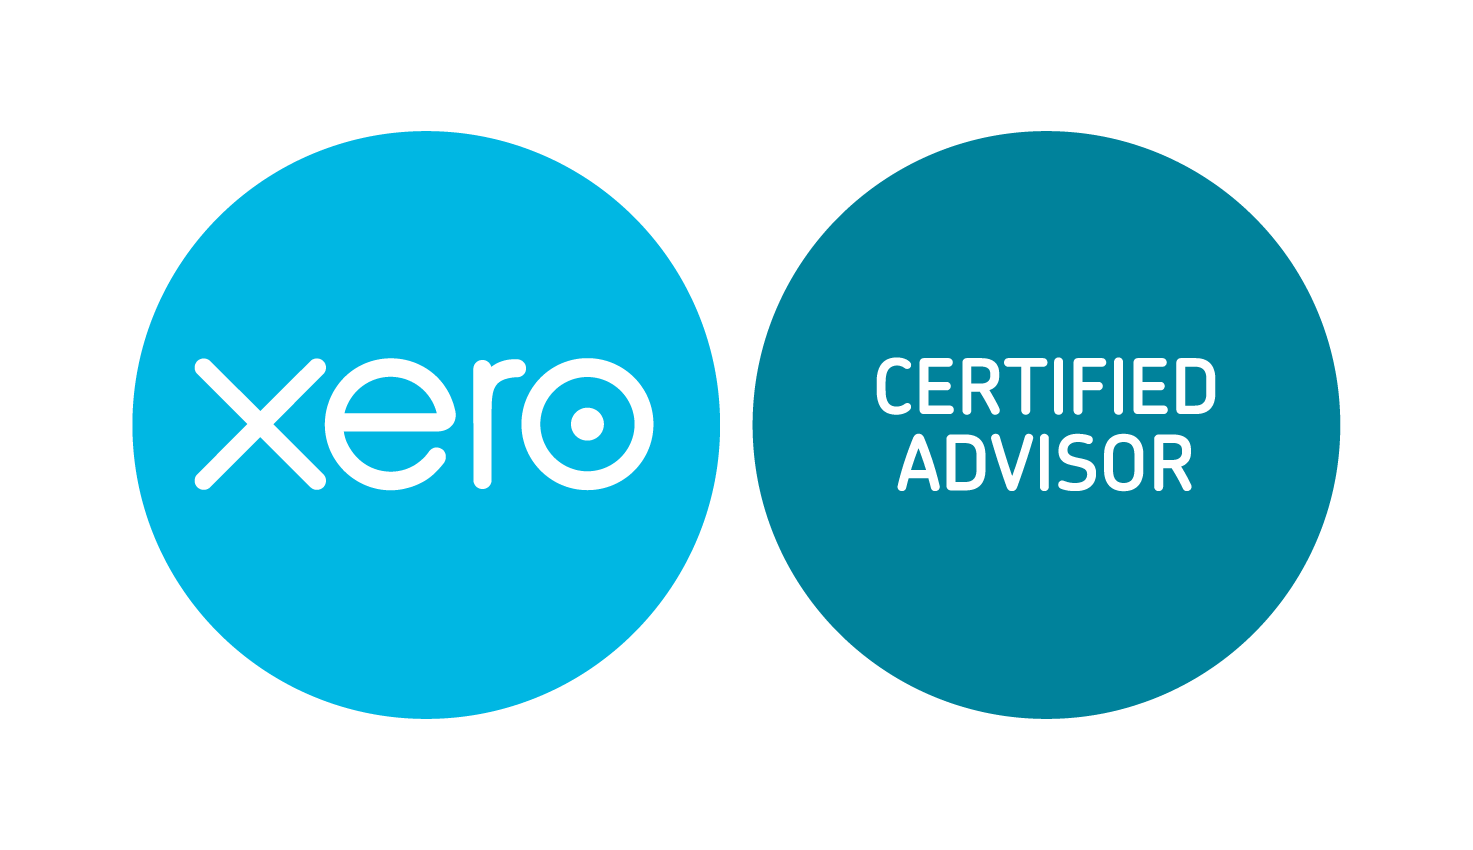 xero-certified-advisor-logo-hires-rgb.png